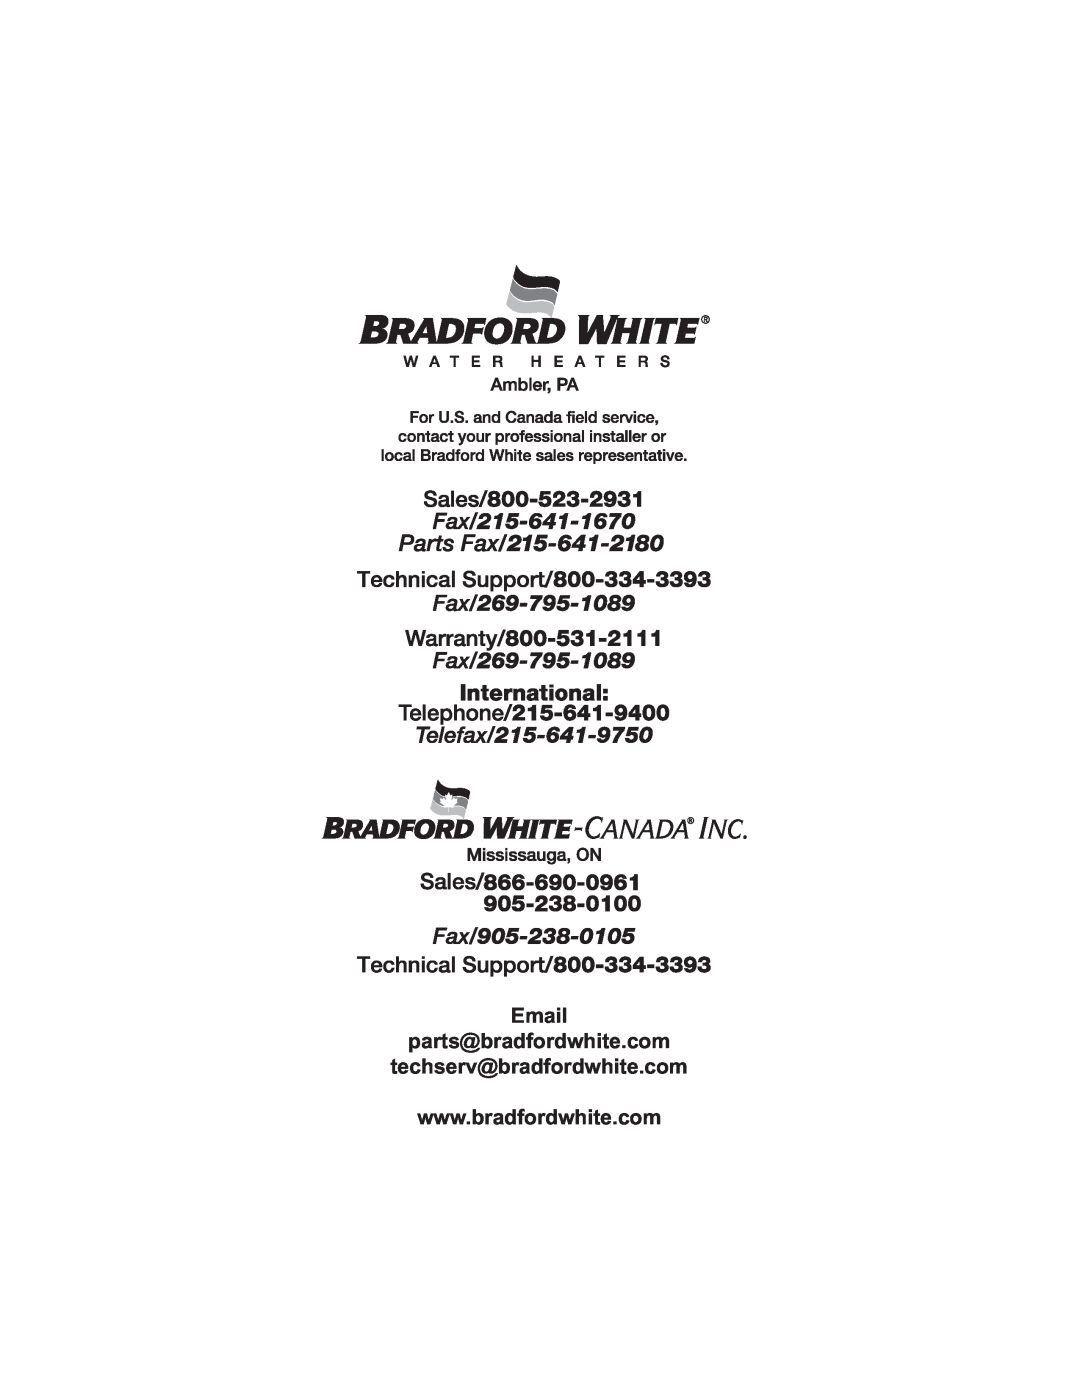 Bradford-White Corp PDX2 Series dimensions Email parts@bradfordwhite.com techserv@bradfordwhite.com 